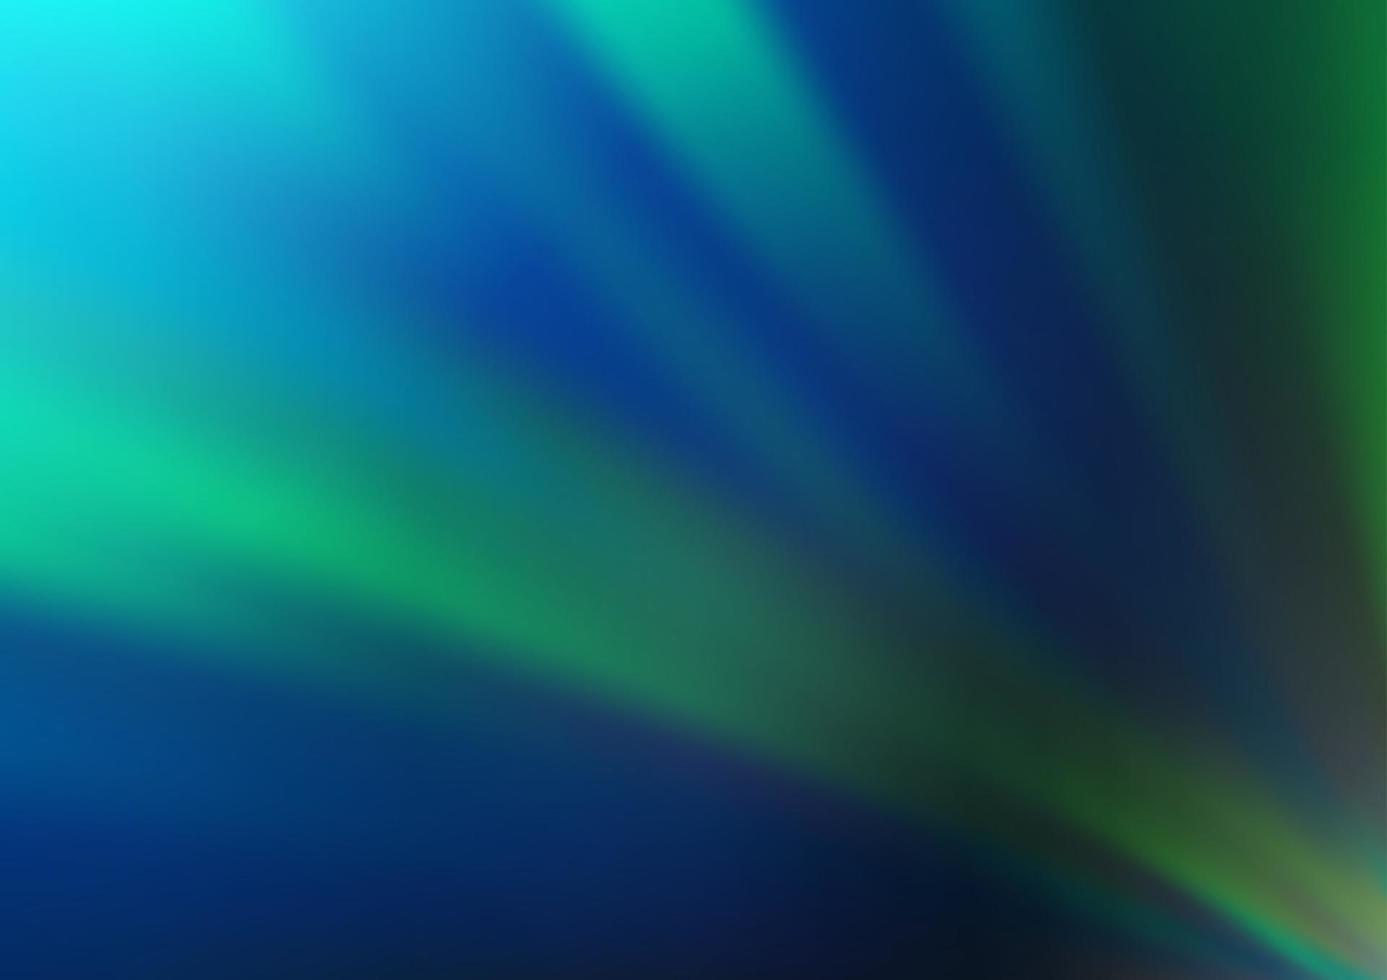 Dark Blue, Green vector abstract background.